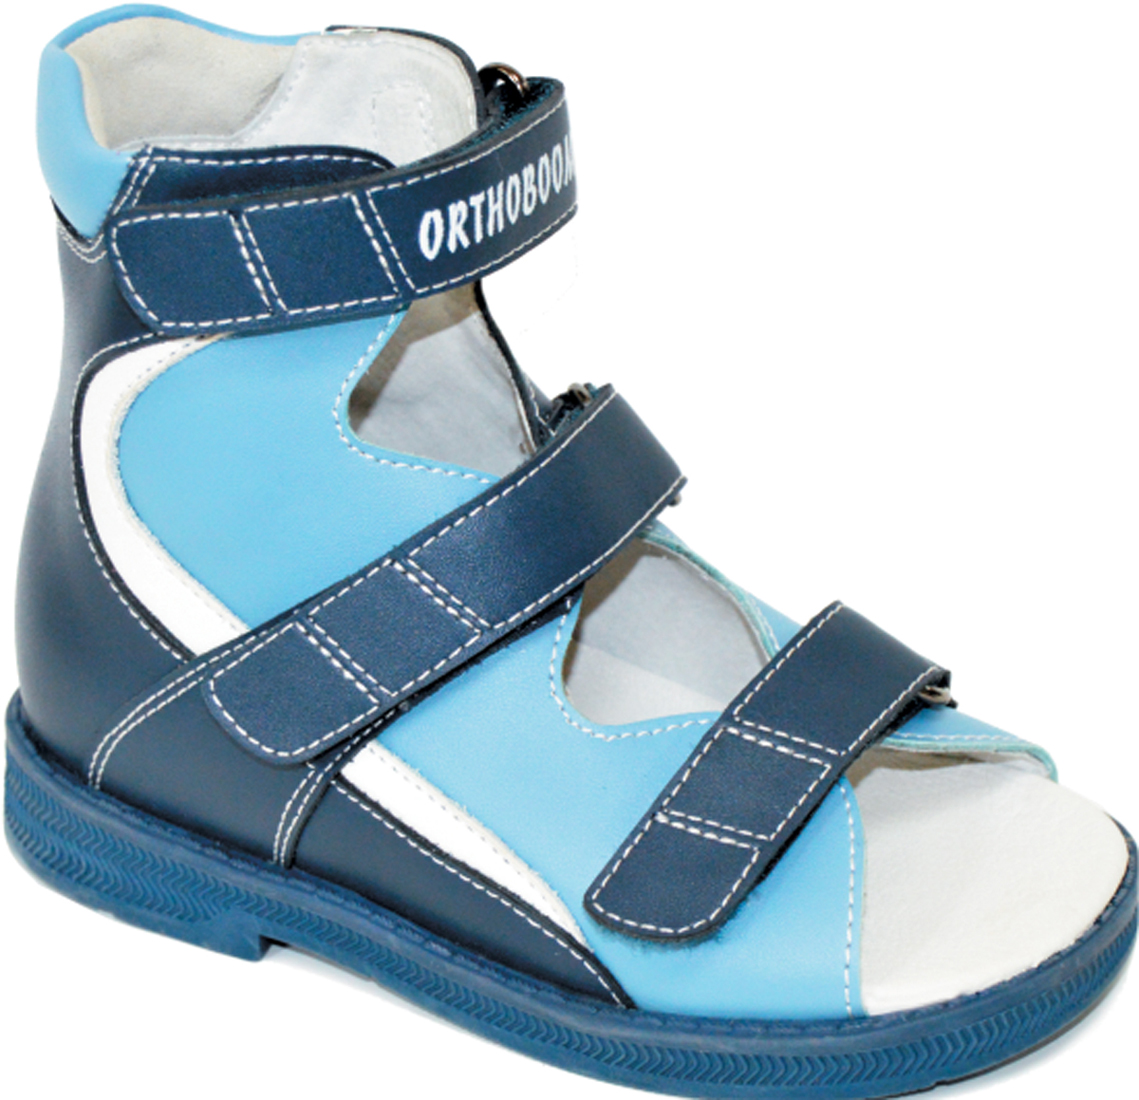 Сандалии для мальчика Orthoboom, цвет: темно-синий-голубой-белый. 71597-33. Размер 29